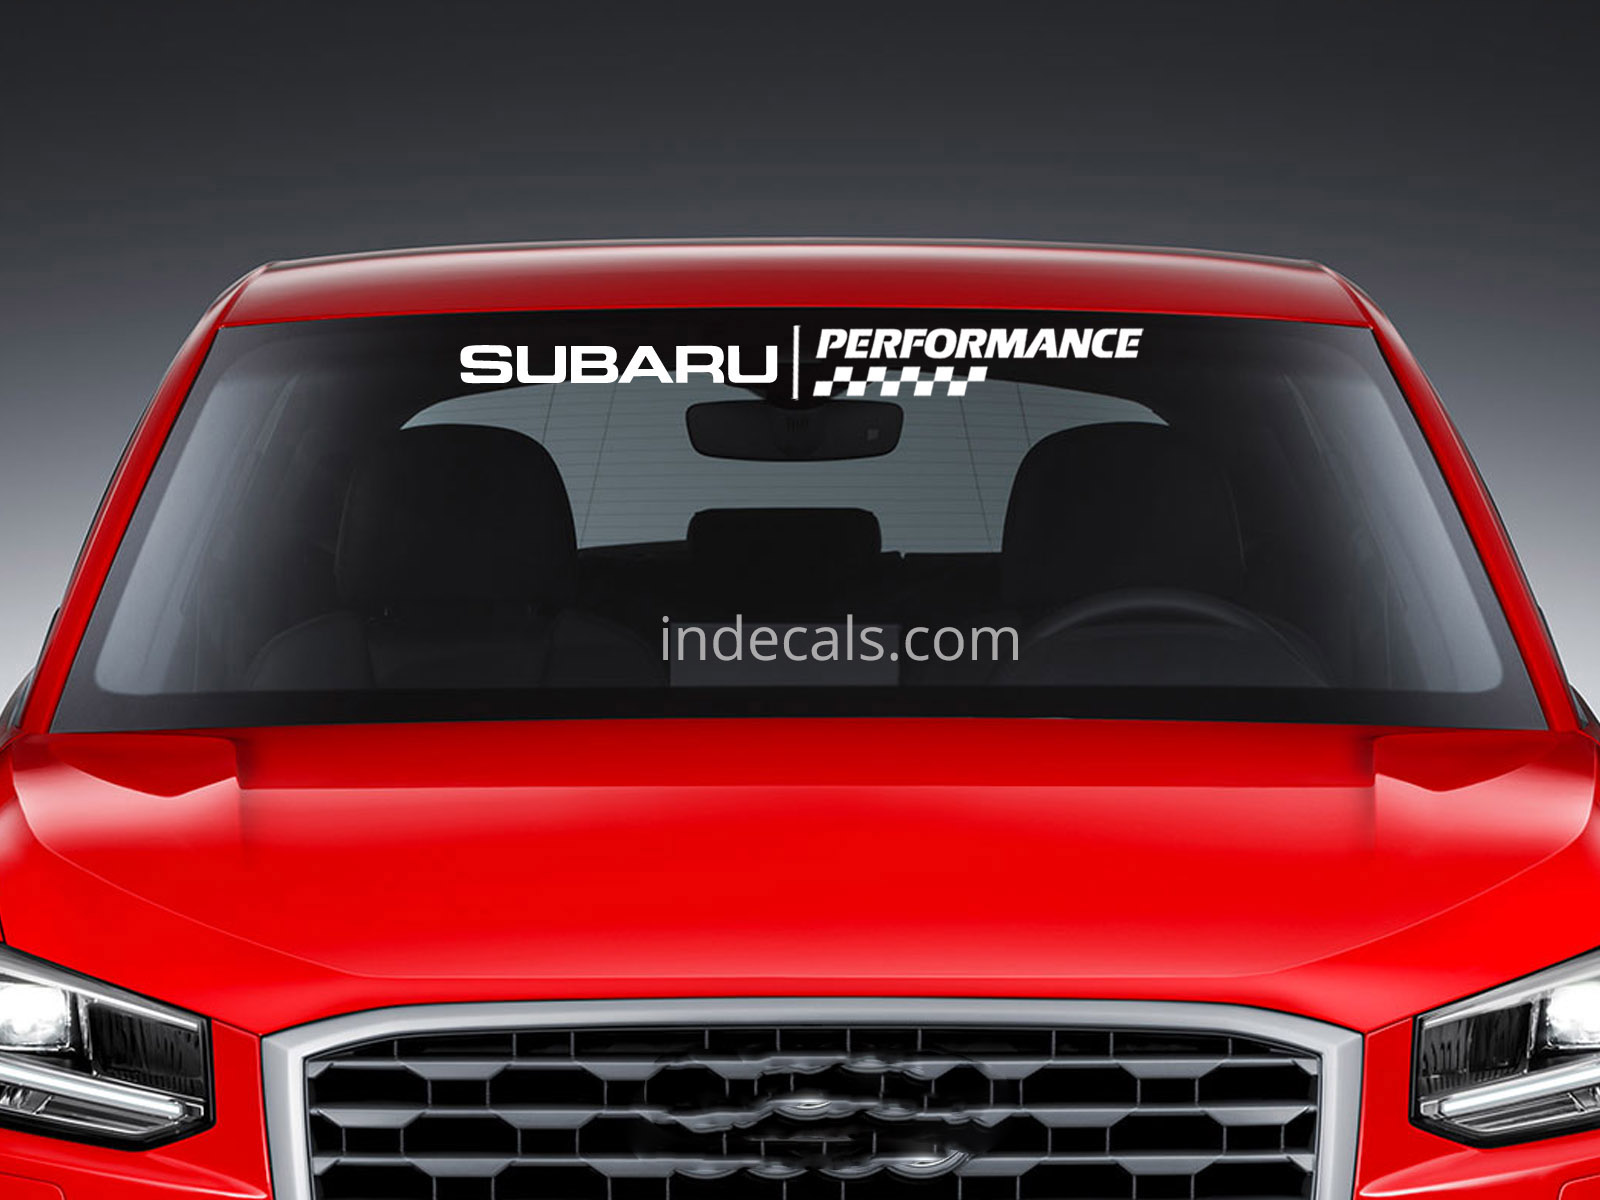 1 x Subaru Performance Sticker for Windshield or Back Window - White